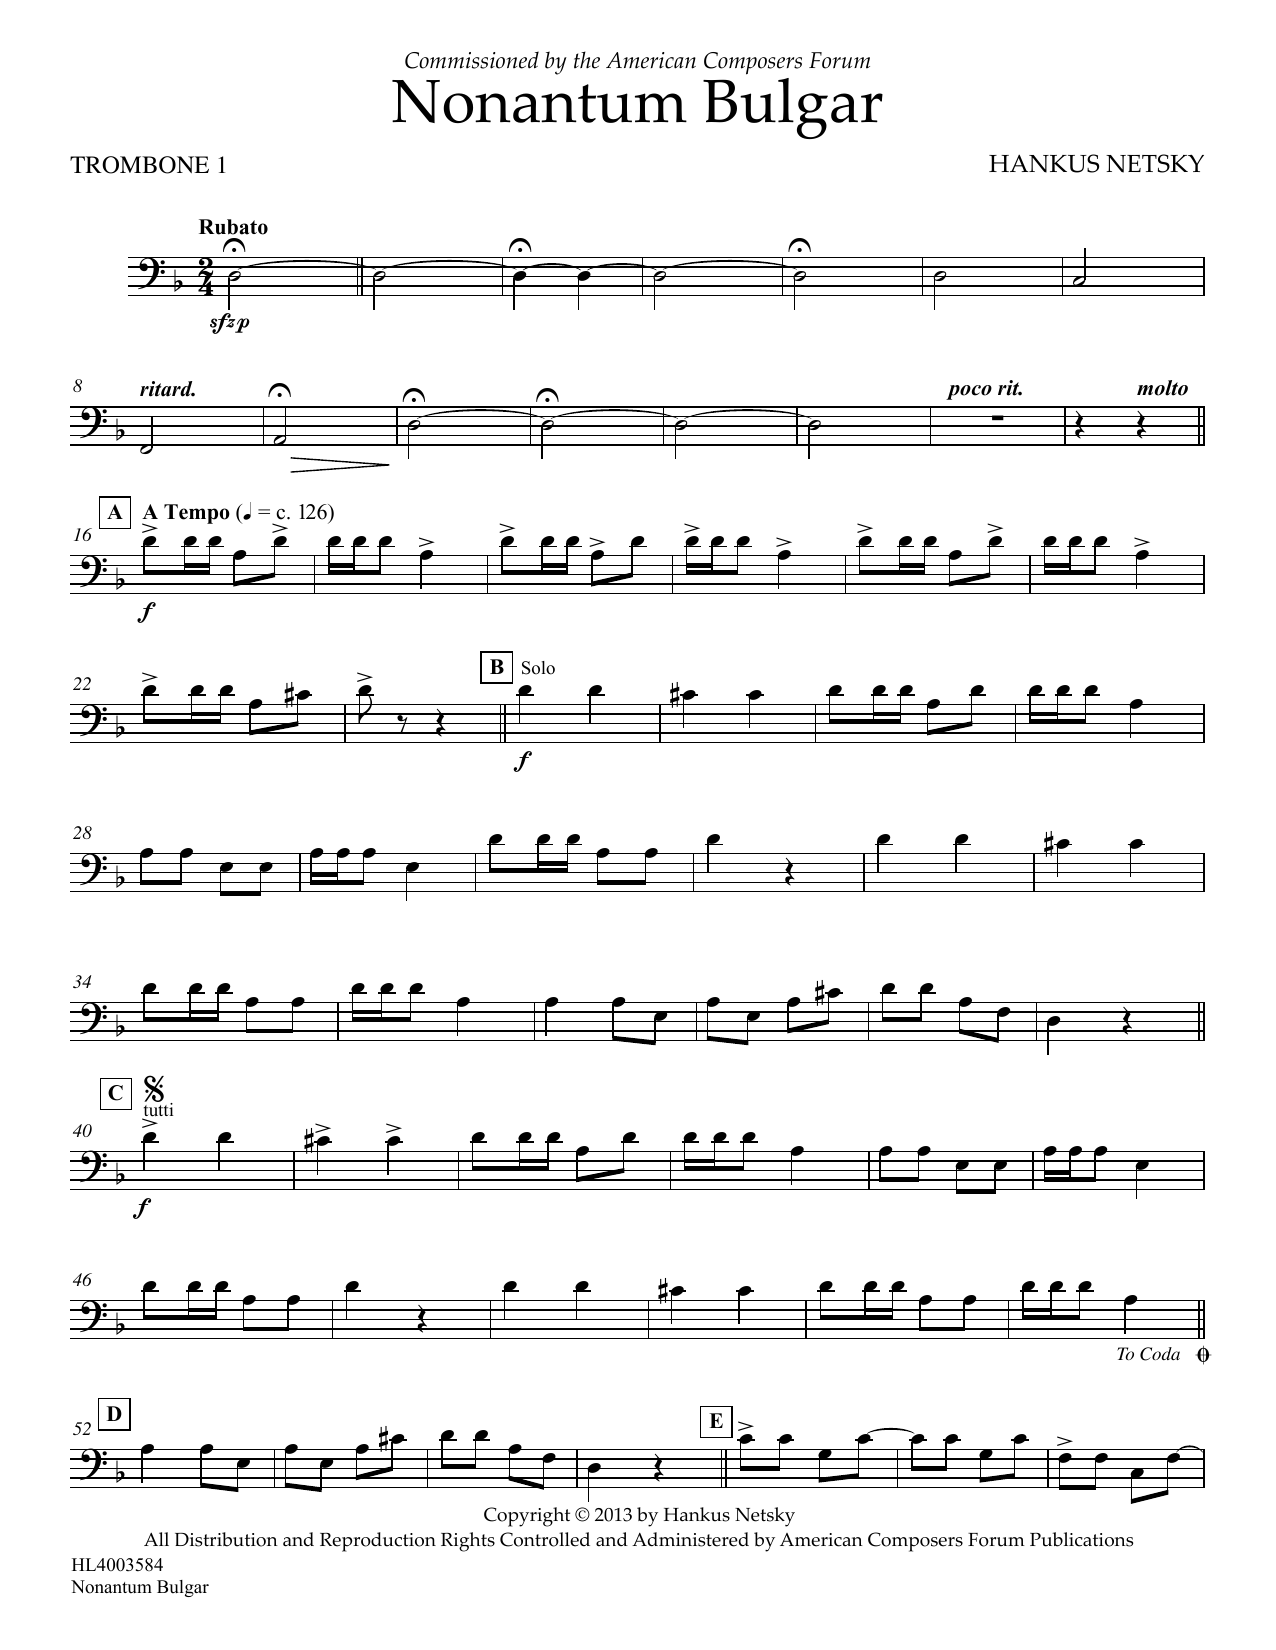 Hankus Netsky Nonantum Bulgar - Trombone 1 Sheet Music Notes & Chords for Concert Band - Download or Print PDF